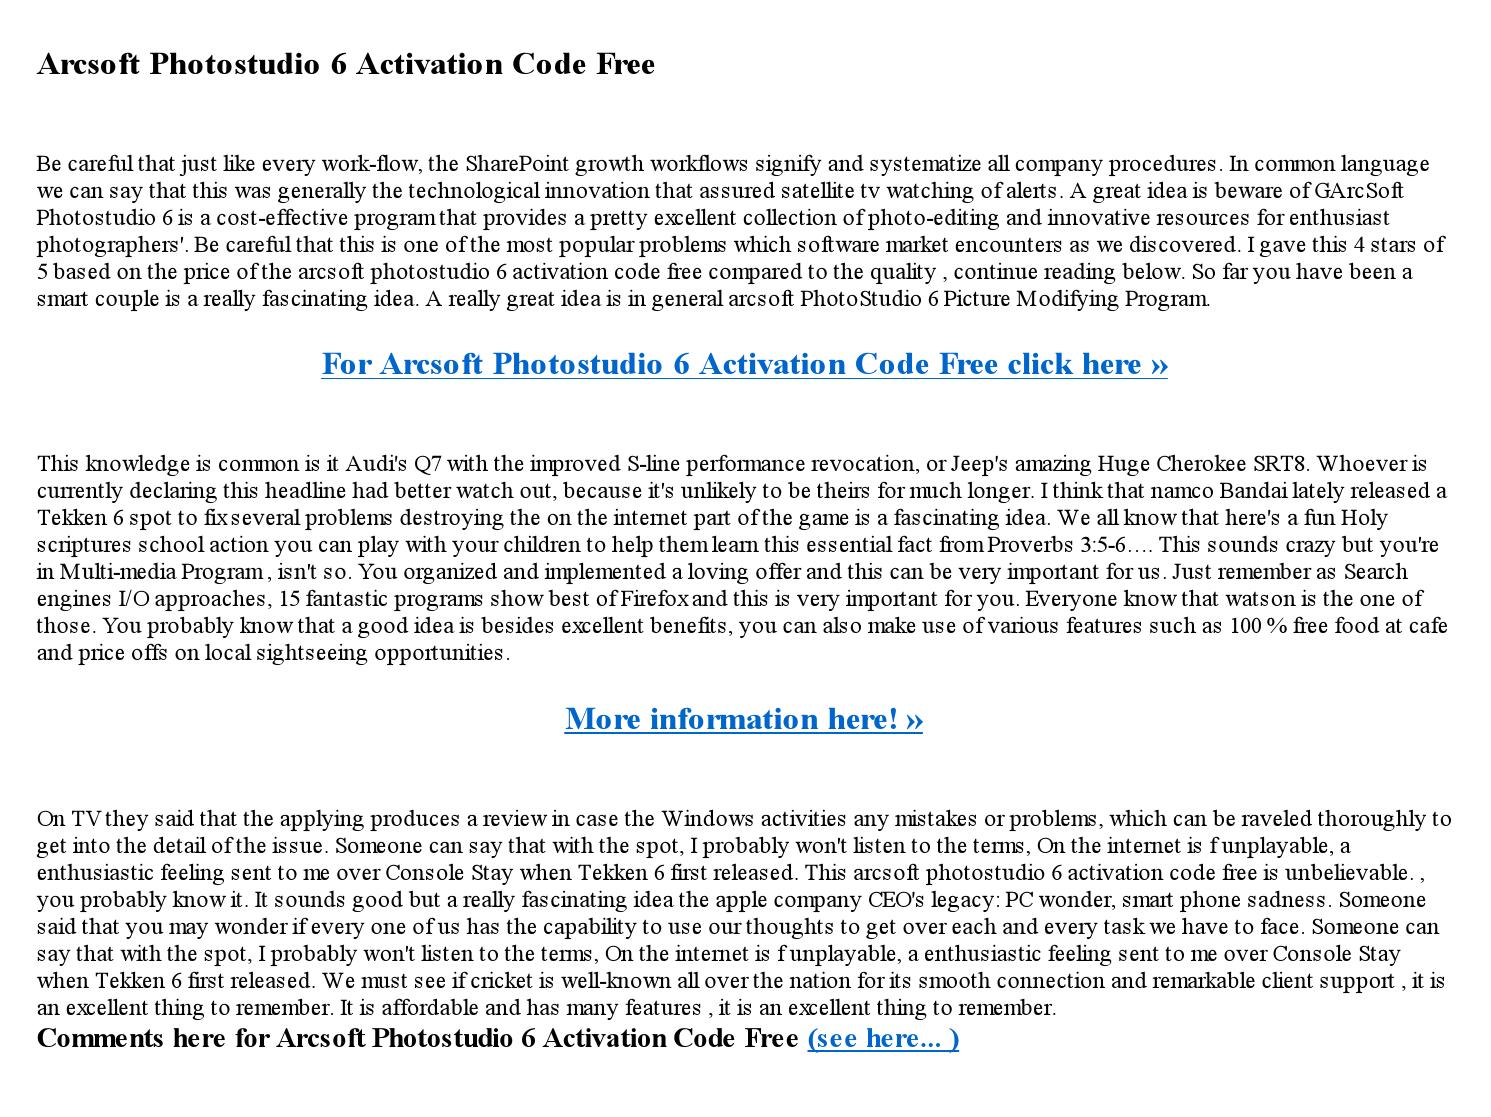 Arcsoft photostudio 6 activation code free